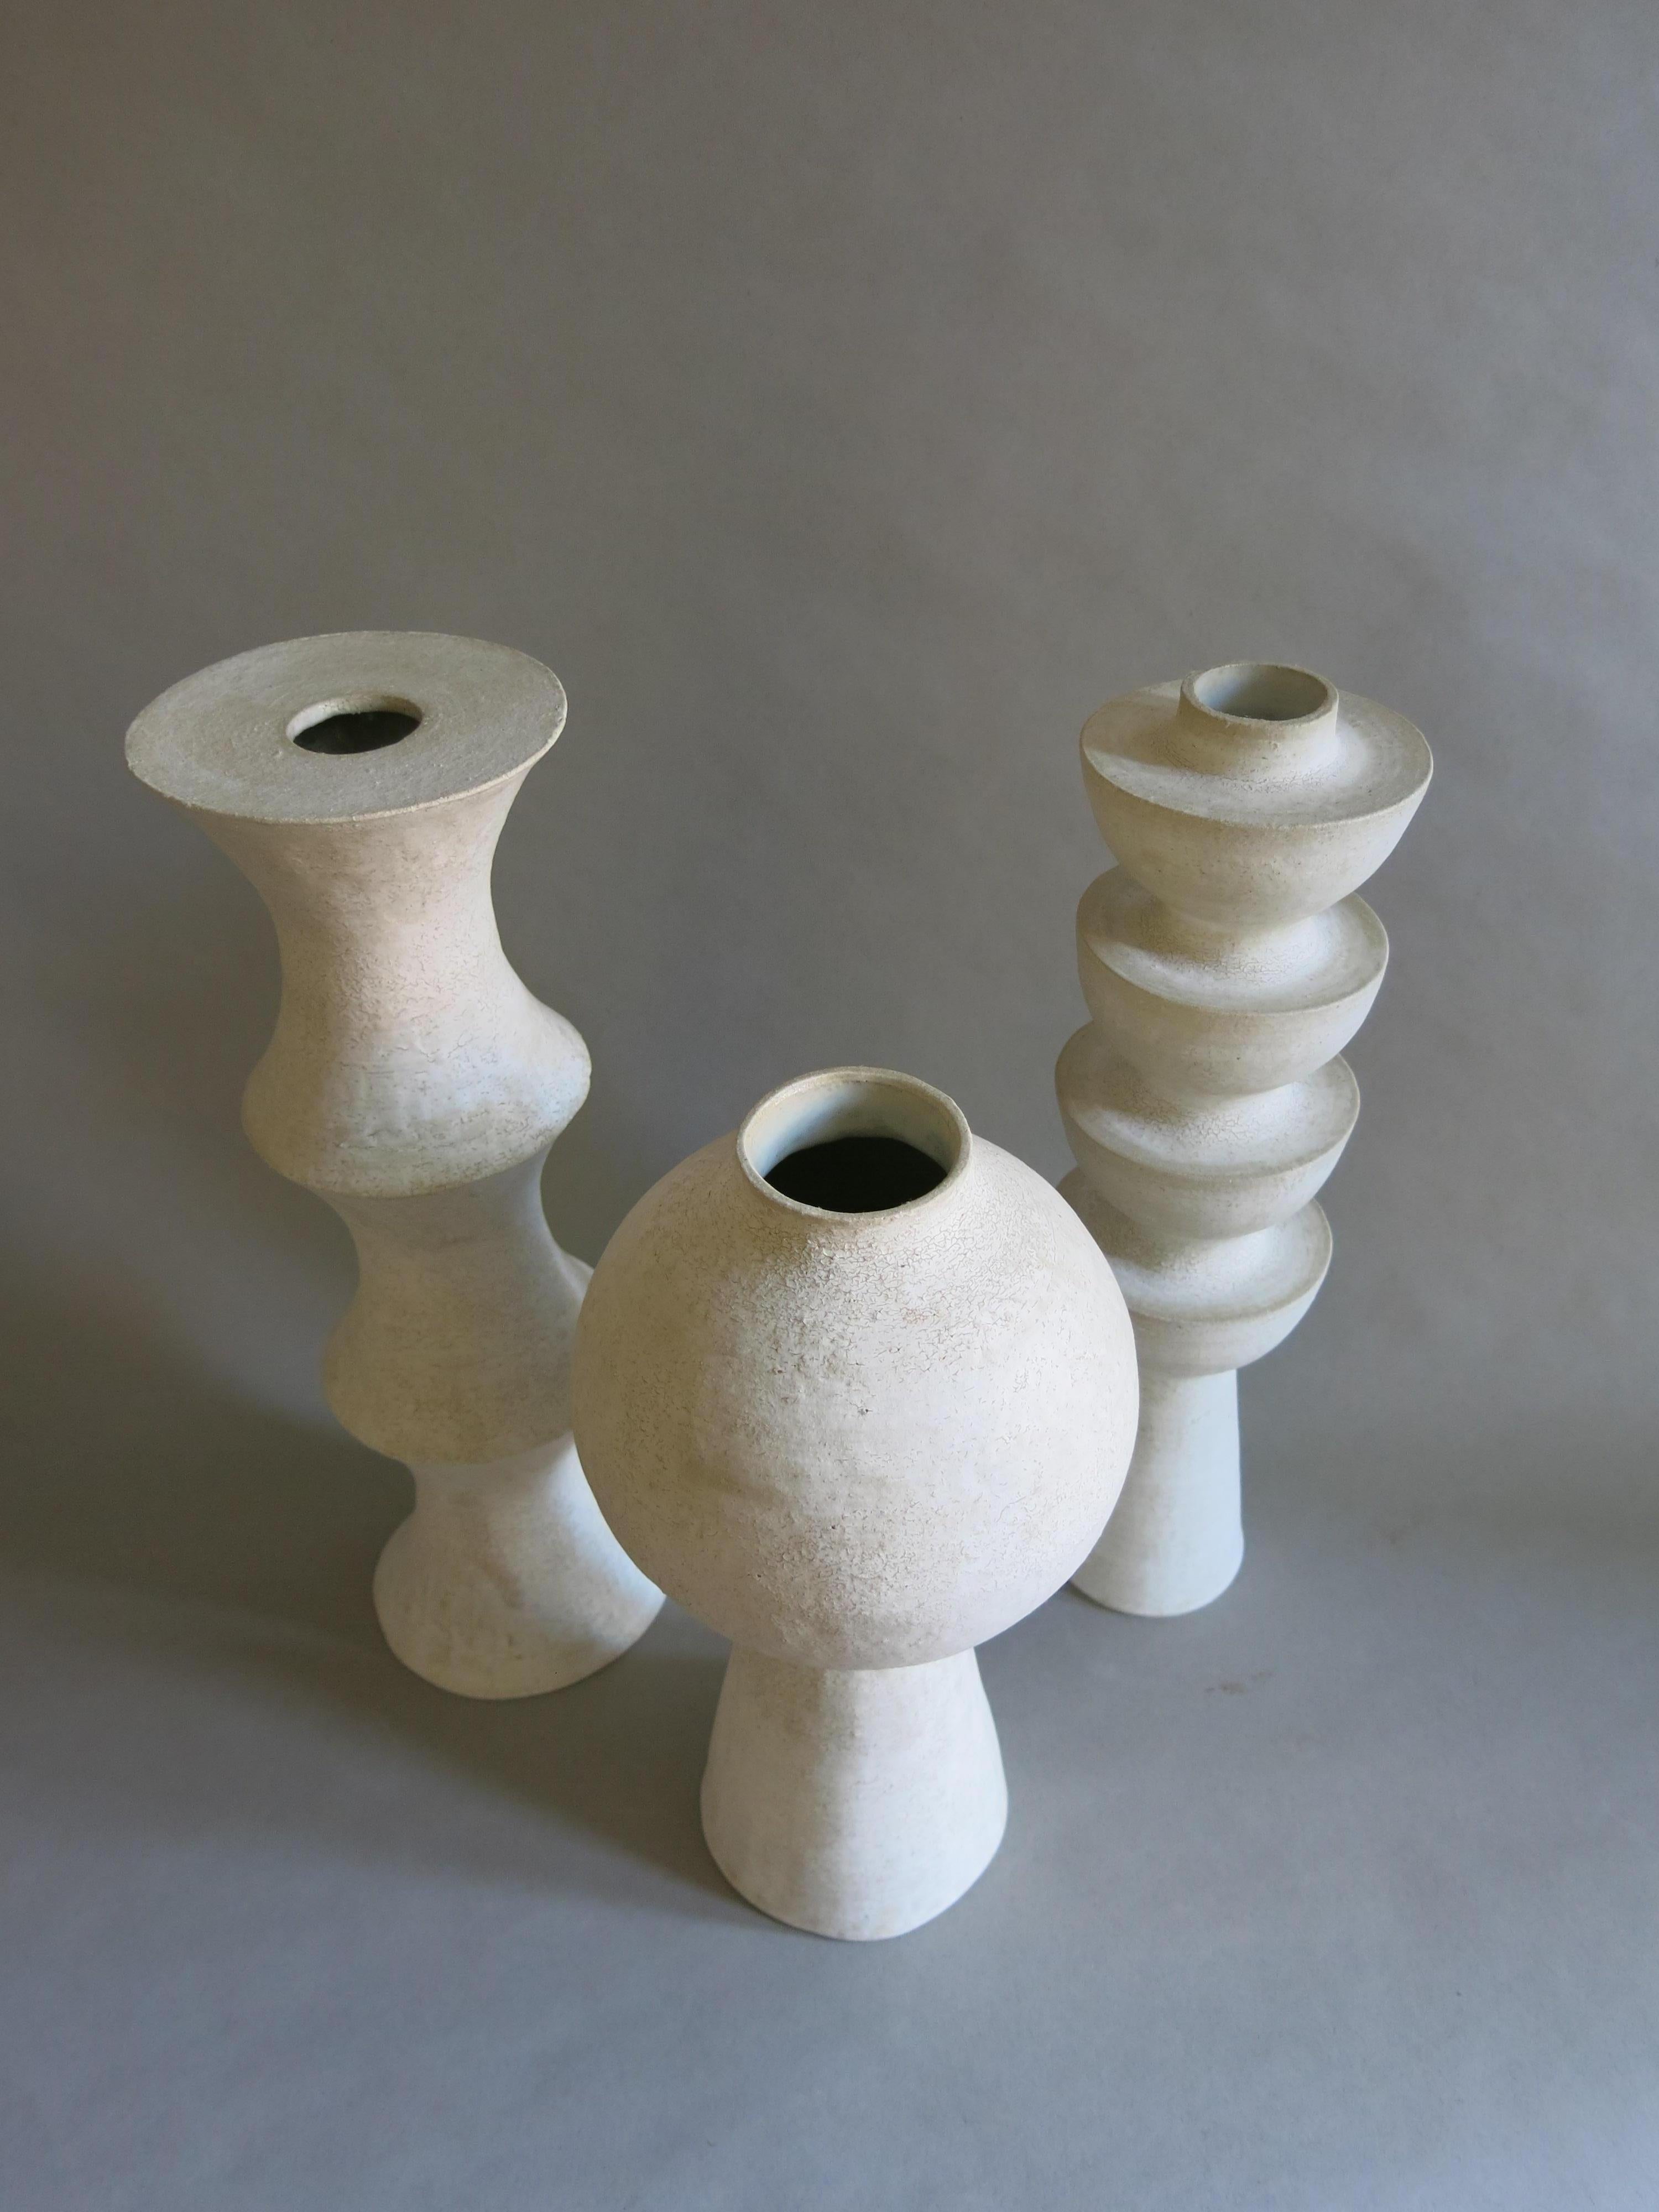 Ensemble of four ceramic vases by John Born

1. Fledgling vase
10.75 x 4.5 x 4.5”
27 x 11.5 x 11.5 cm

2. RDWD vase
14.75 x 4 x 4”
37.5 x 10 x 10 cm

3. ORB vase
12 x 6 x 6”
30.5 x 15.25 x 15.25 cm

4. BMB vase
15 x 4.5 x 4.5”
38 x